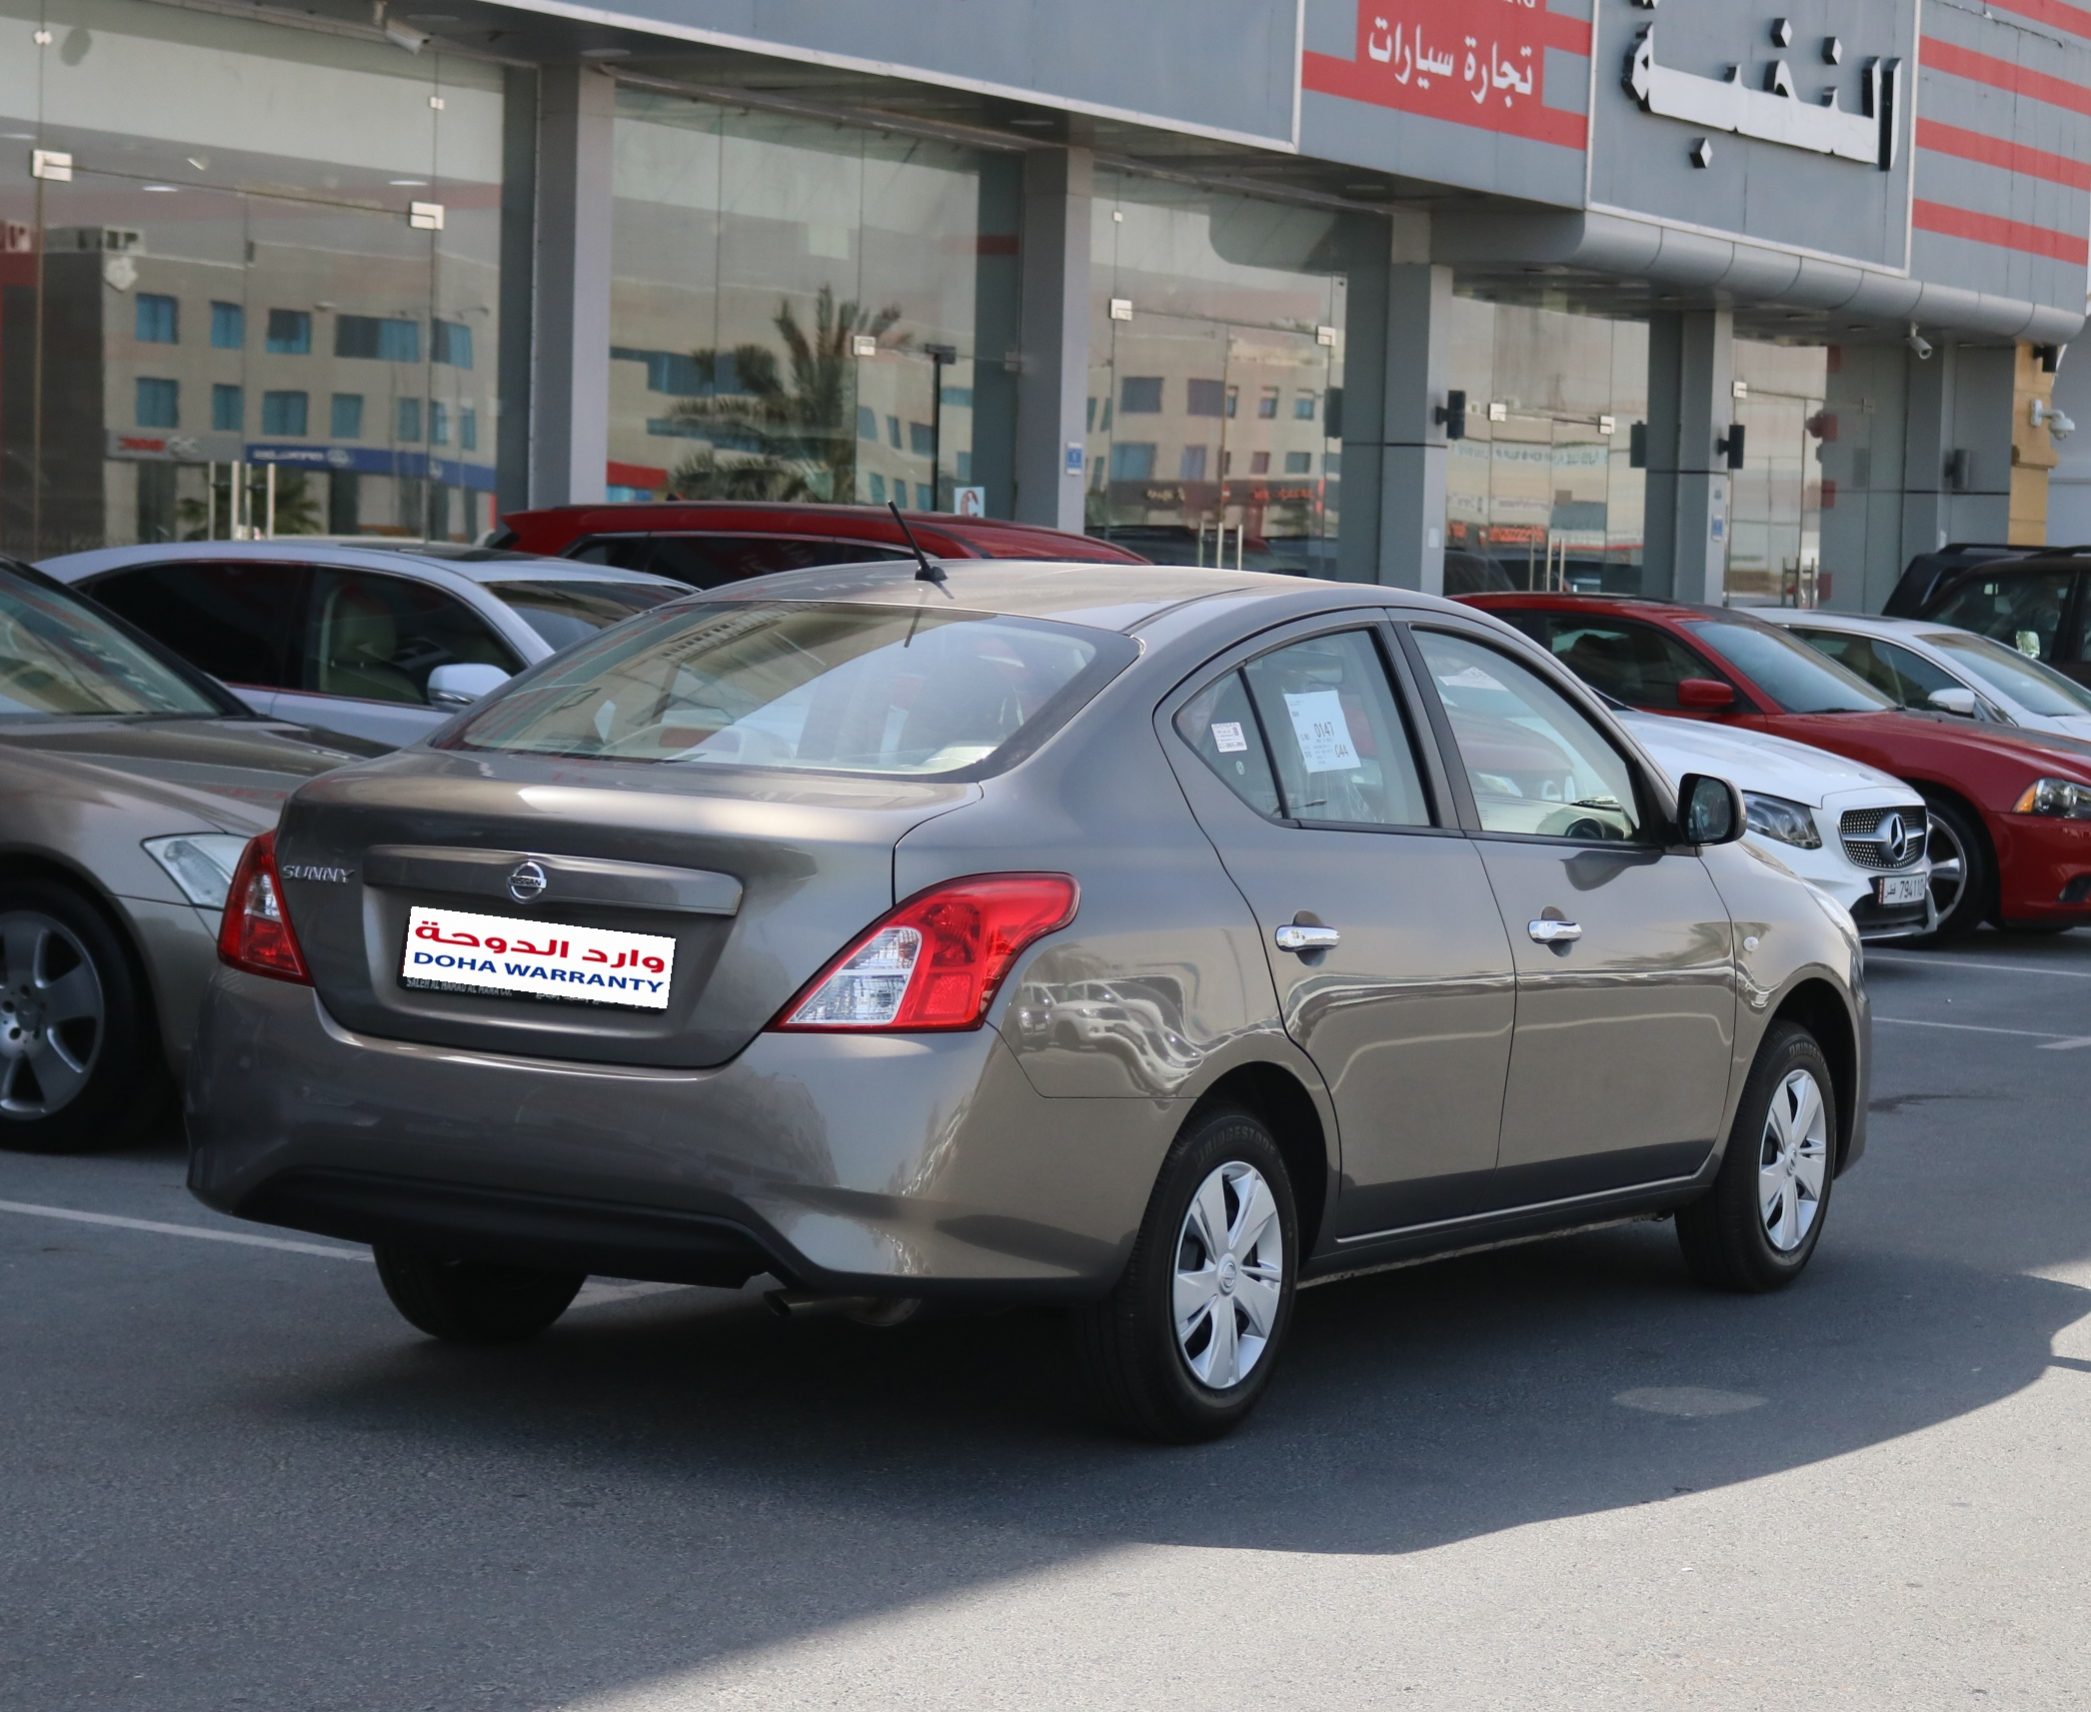 Nissan Sunny 2019 - Elite Motors Qatar